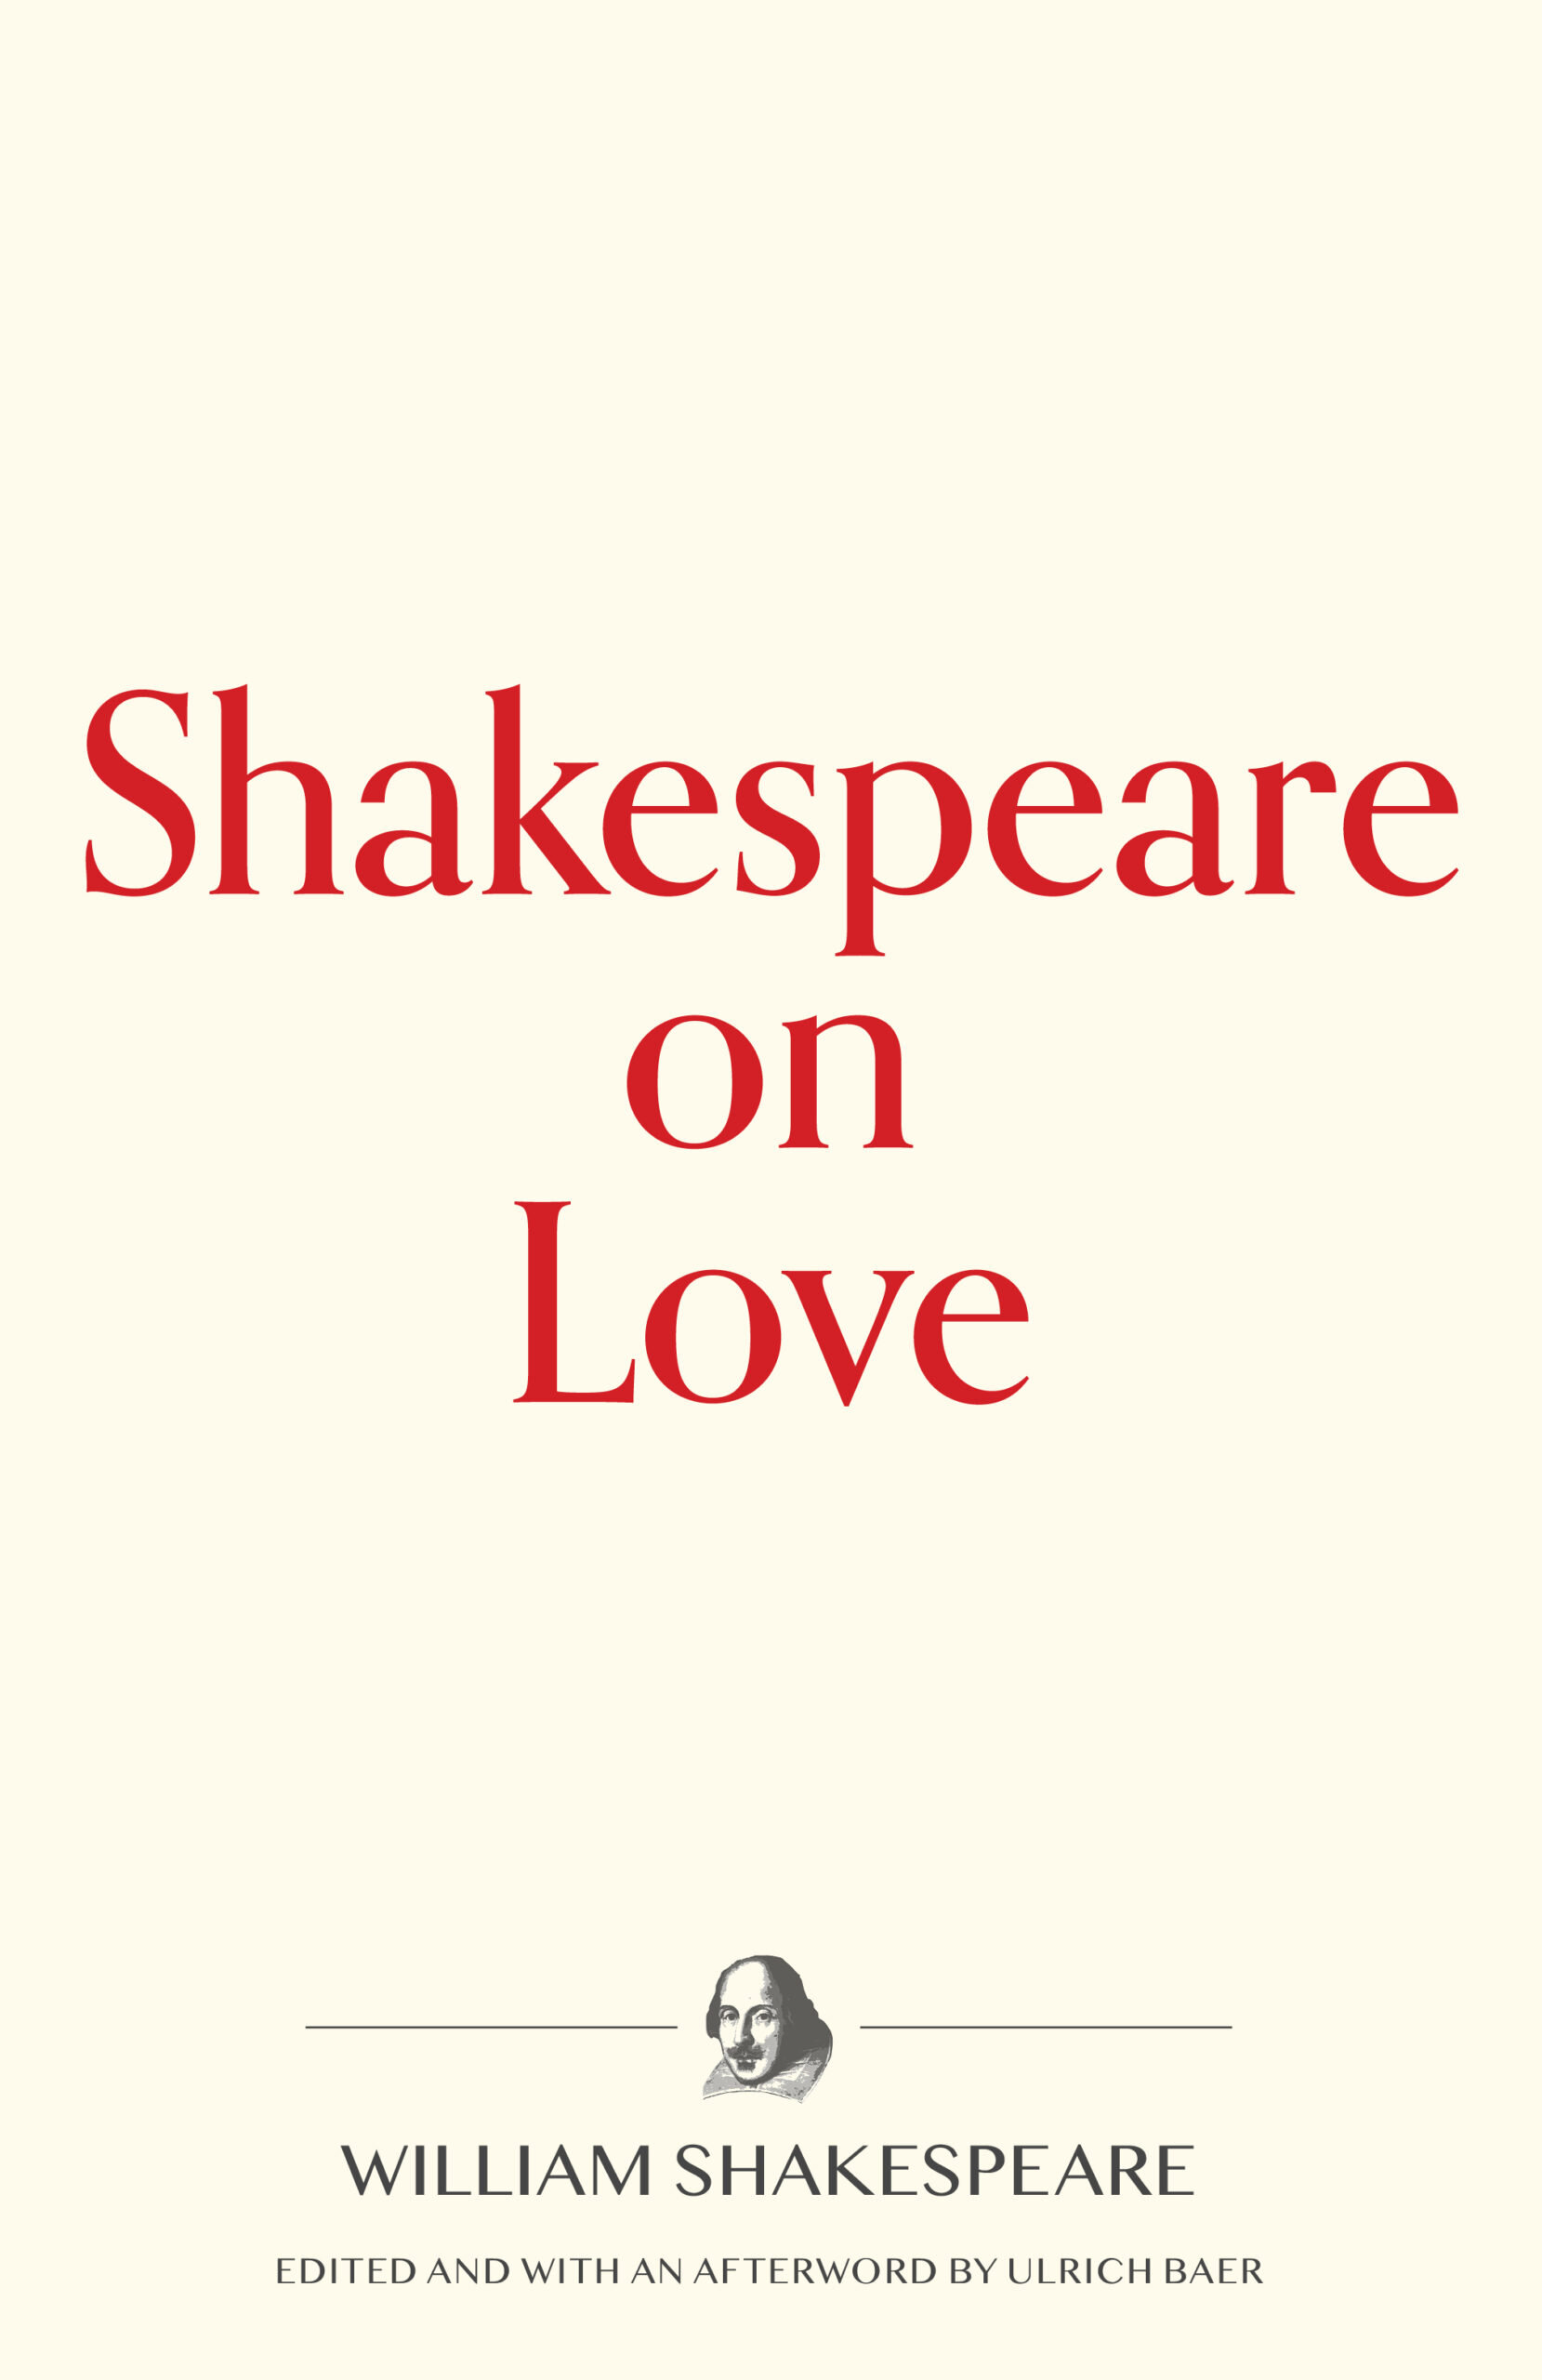 Shakespeare-on-Love-cover-half-scaled.jpg